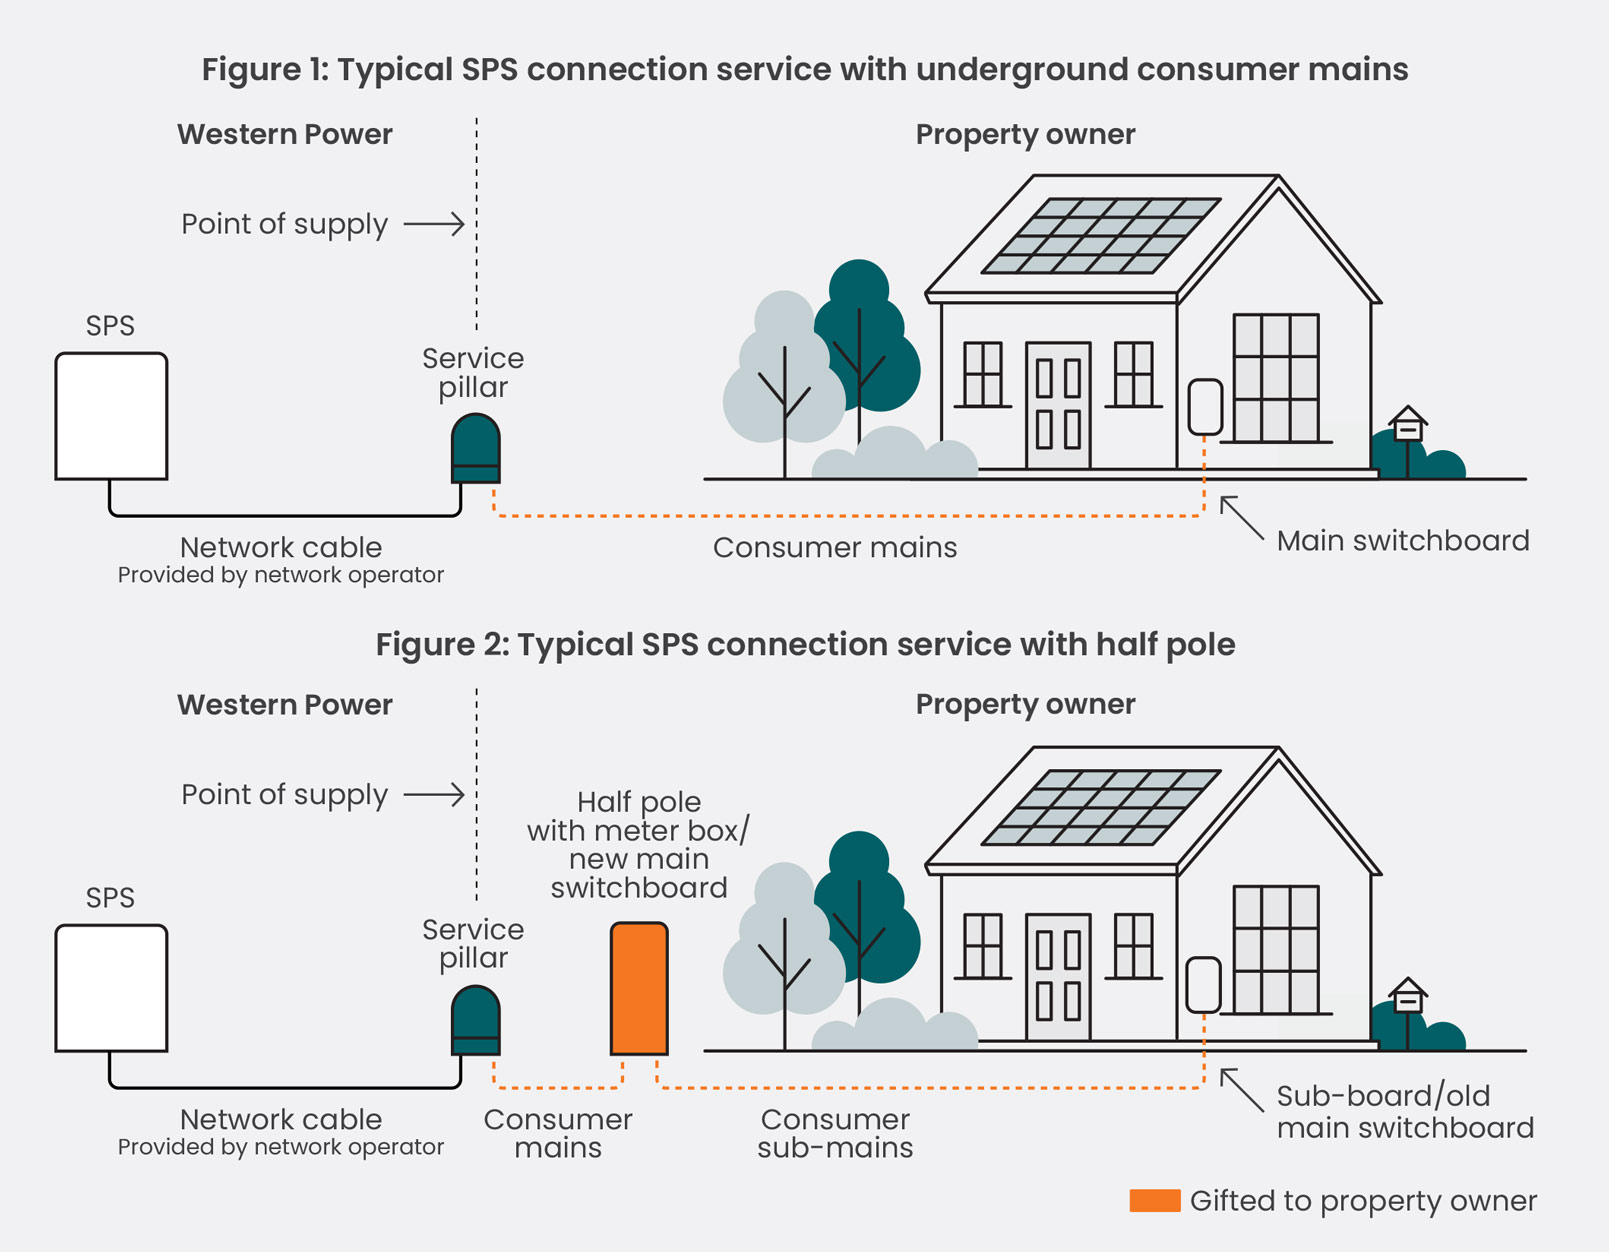 Half pole and consumer sub-mains SPS diagram